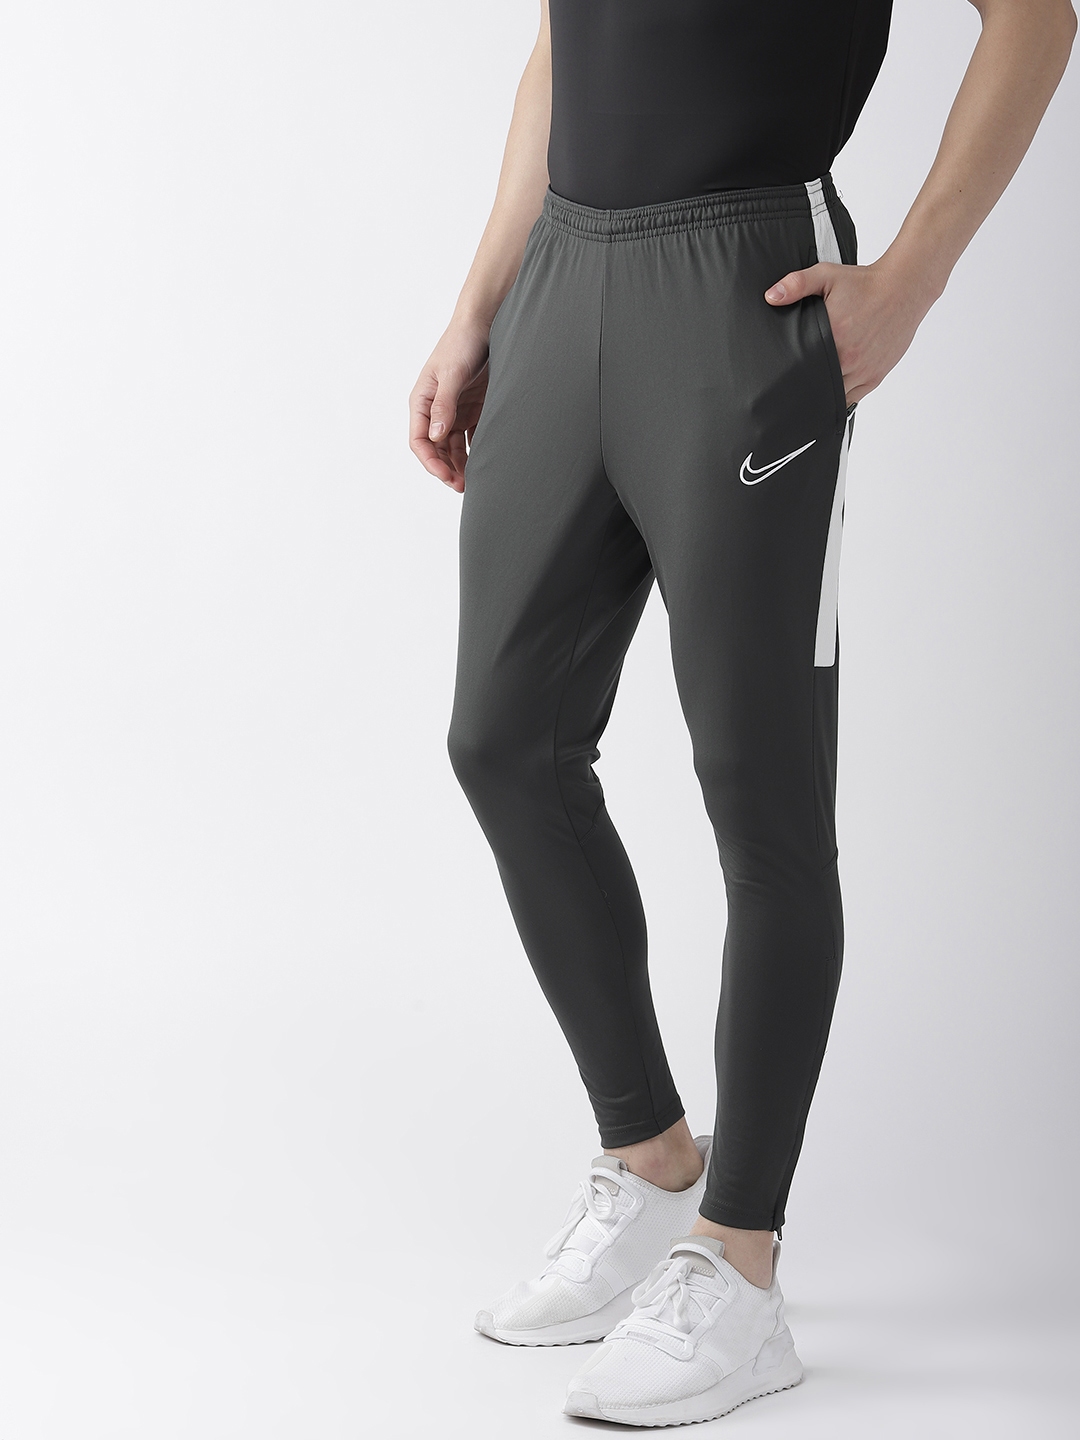 Nike Track Pants  Min 50 Off  Buy Nike Track Pants Online For Men at  Best Prices In India  Flipkartcom